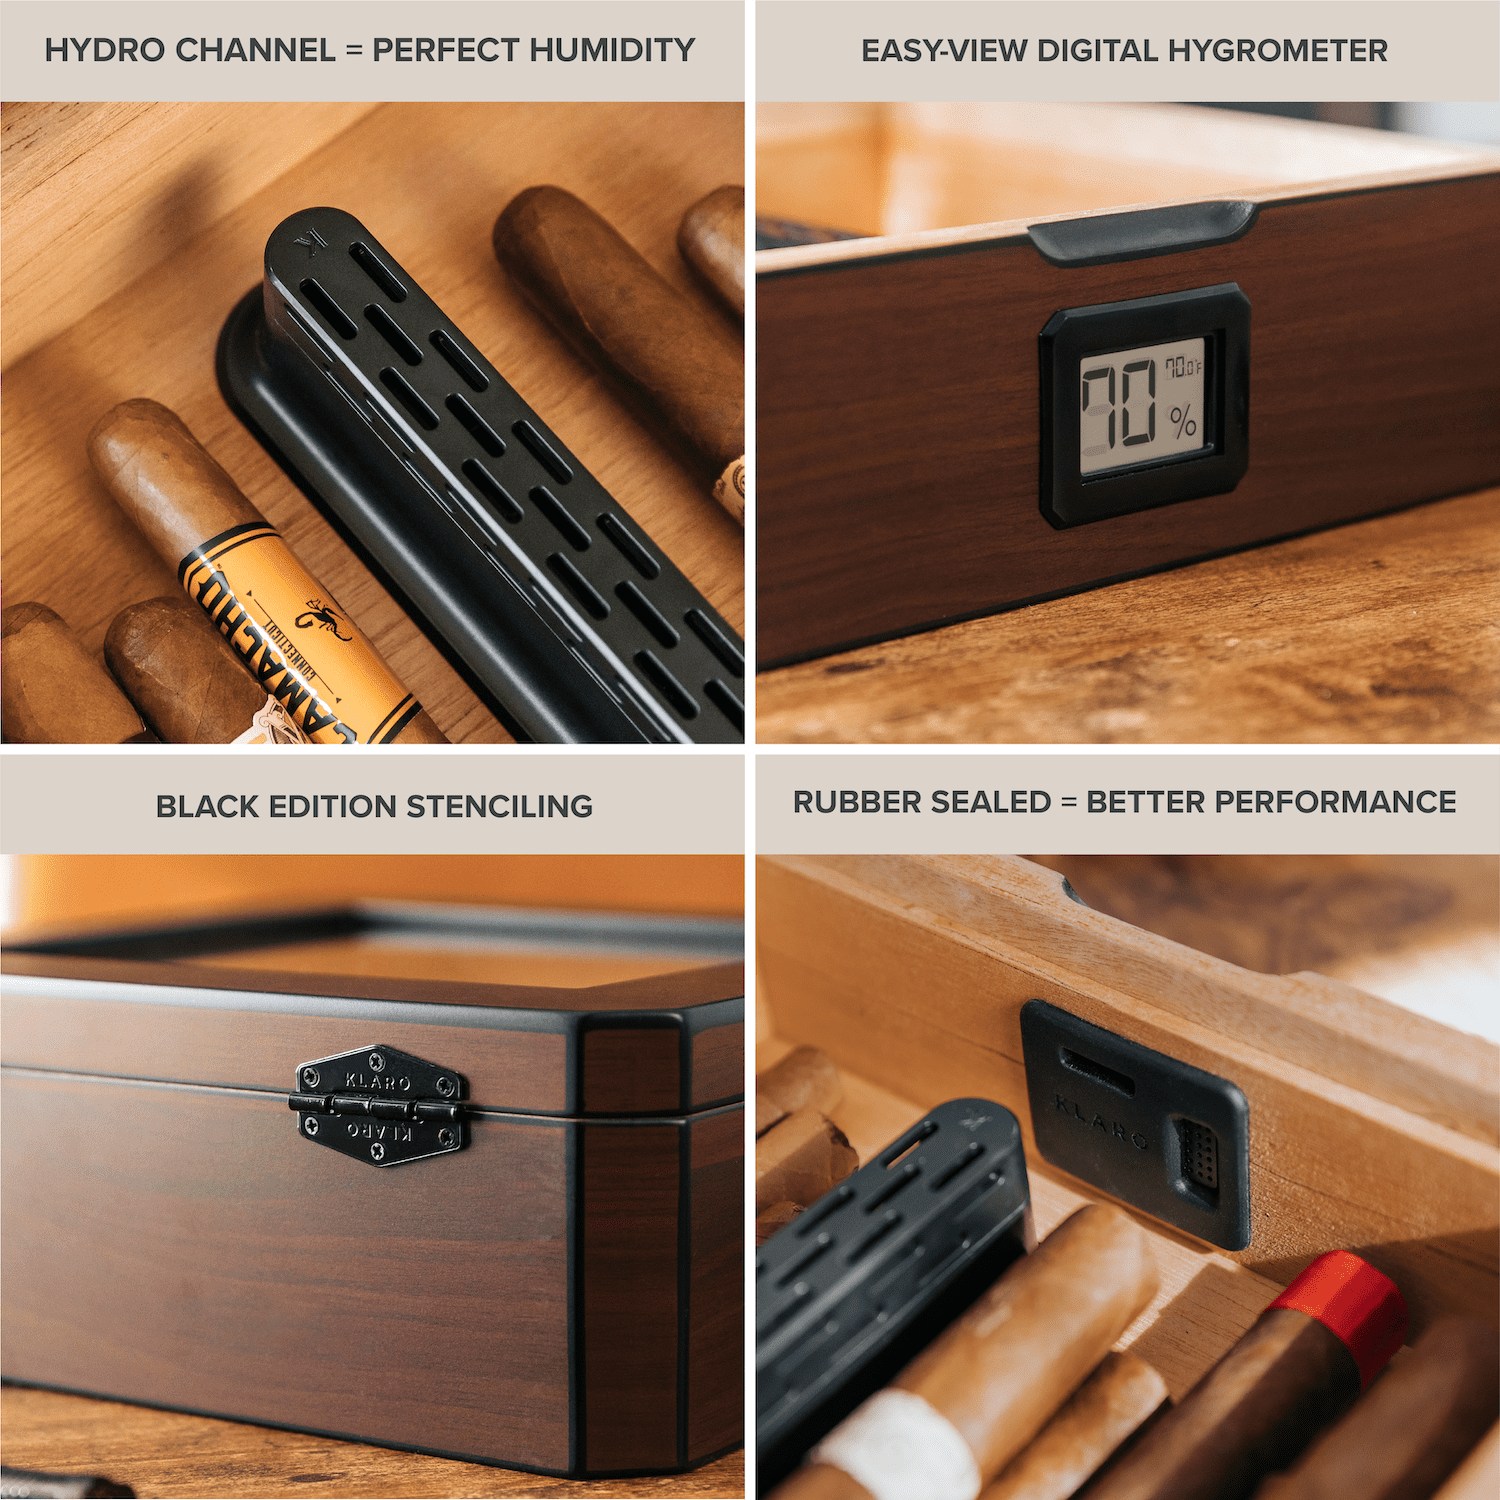 Mag Desktop Humidor, Walnut Finish, Spanish Cedar, Holds 20-30 Cigars, Glass Top by Case Elegance, Brown